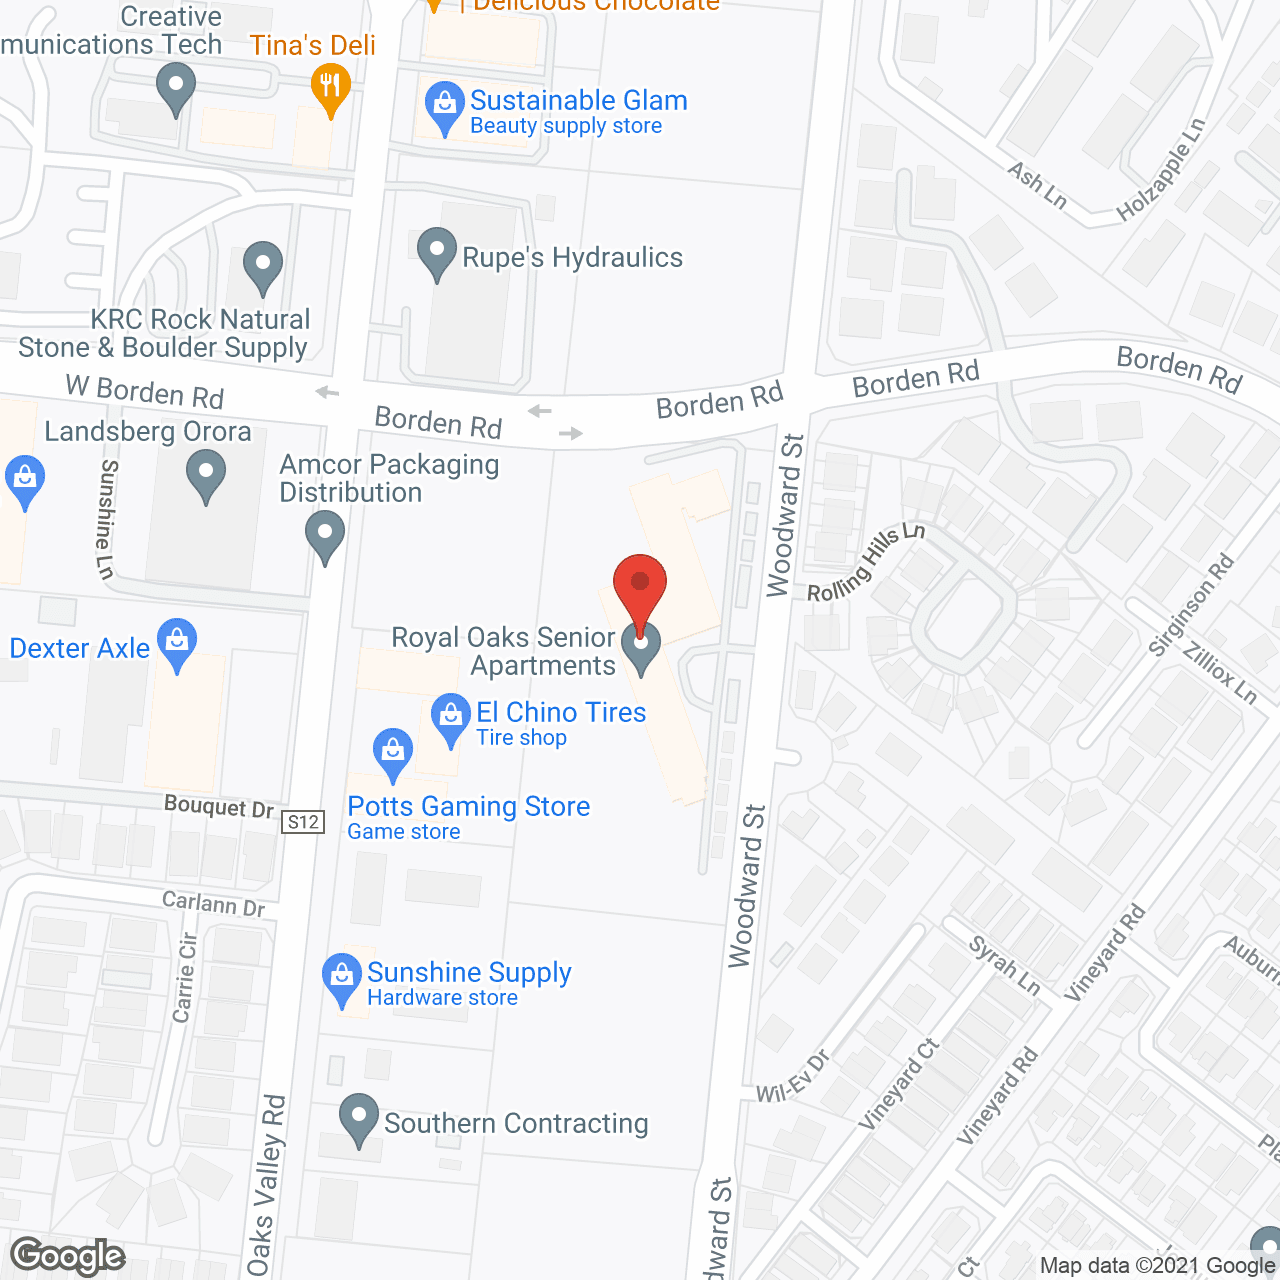 Royal Oaks Senior Apartments in google map